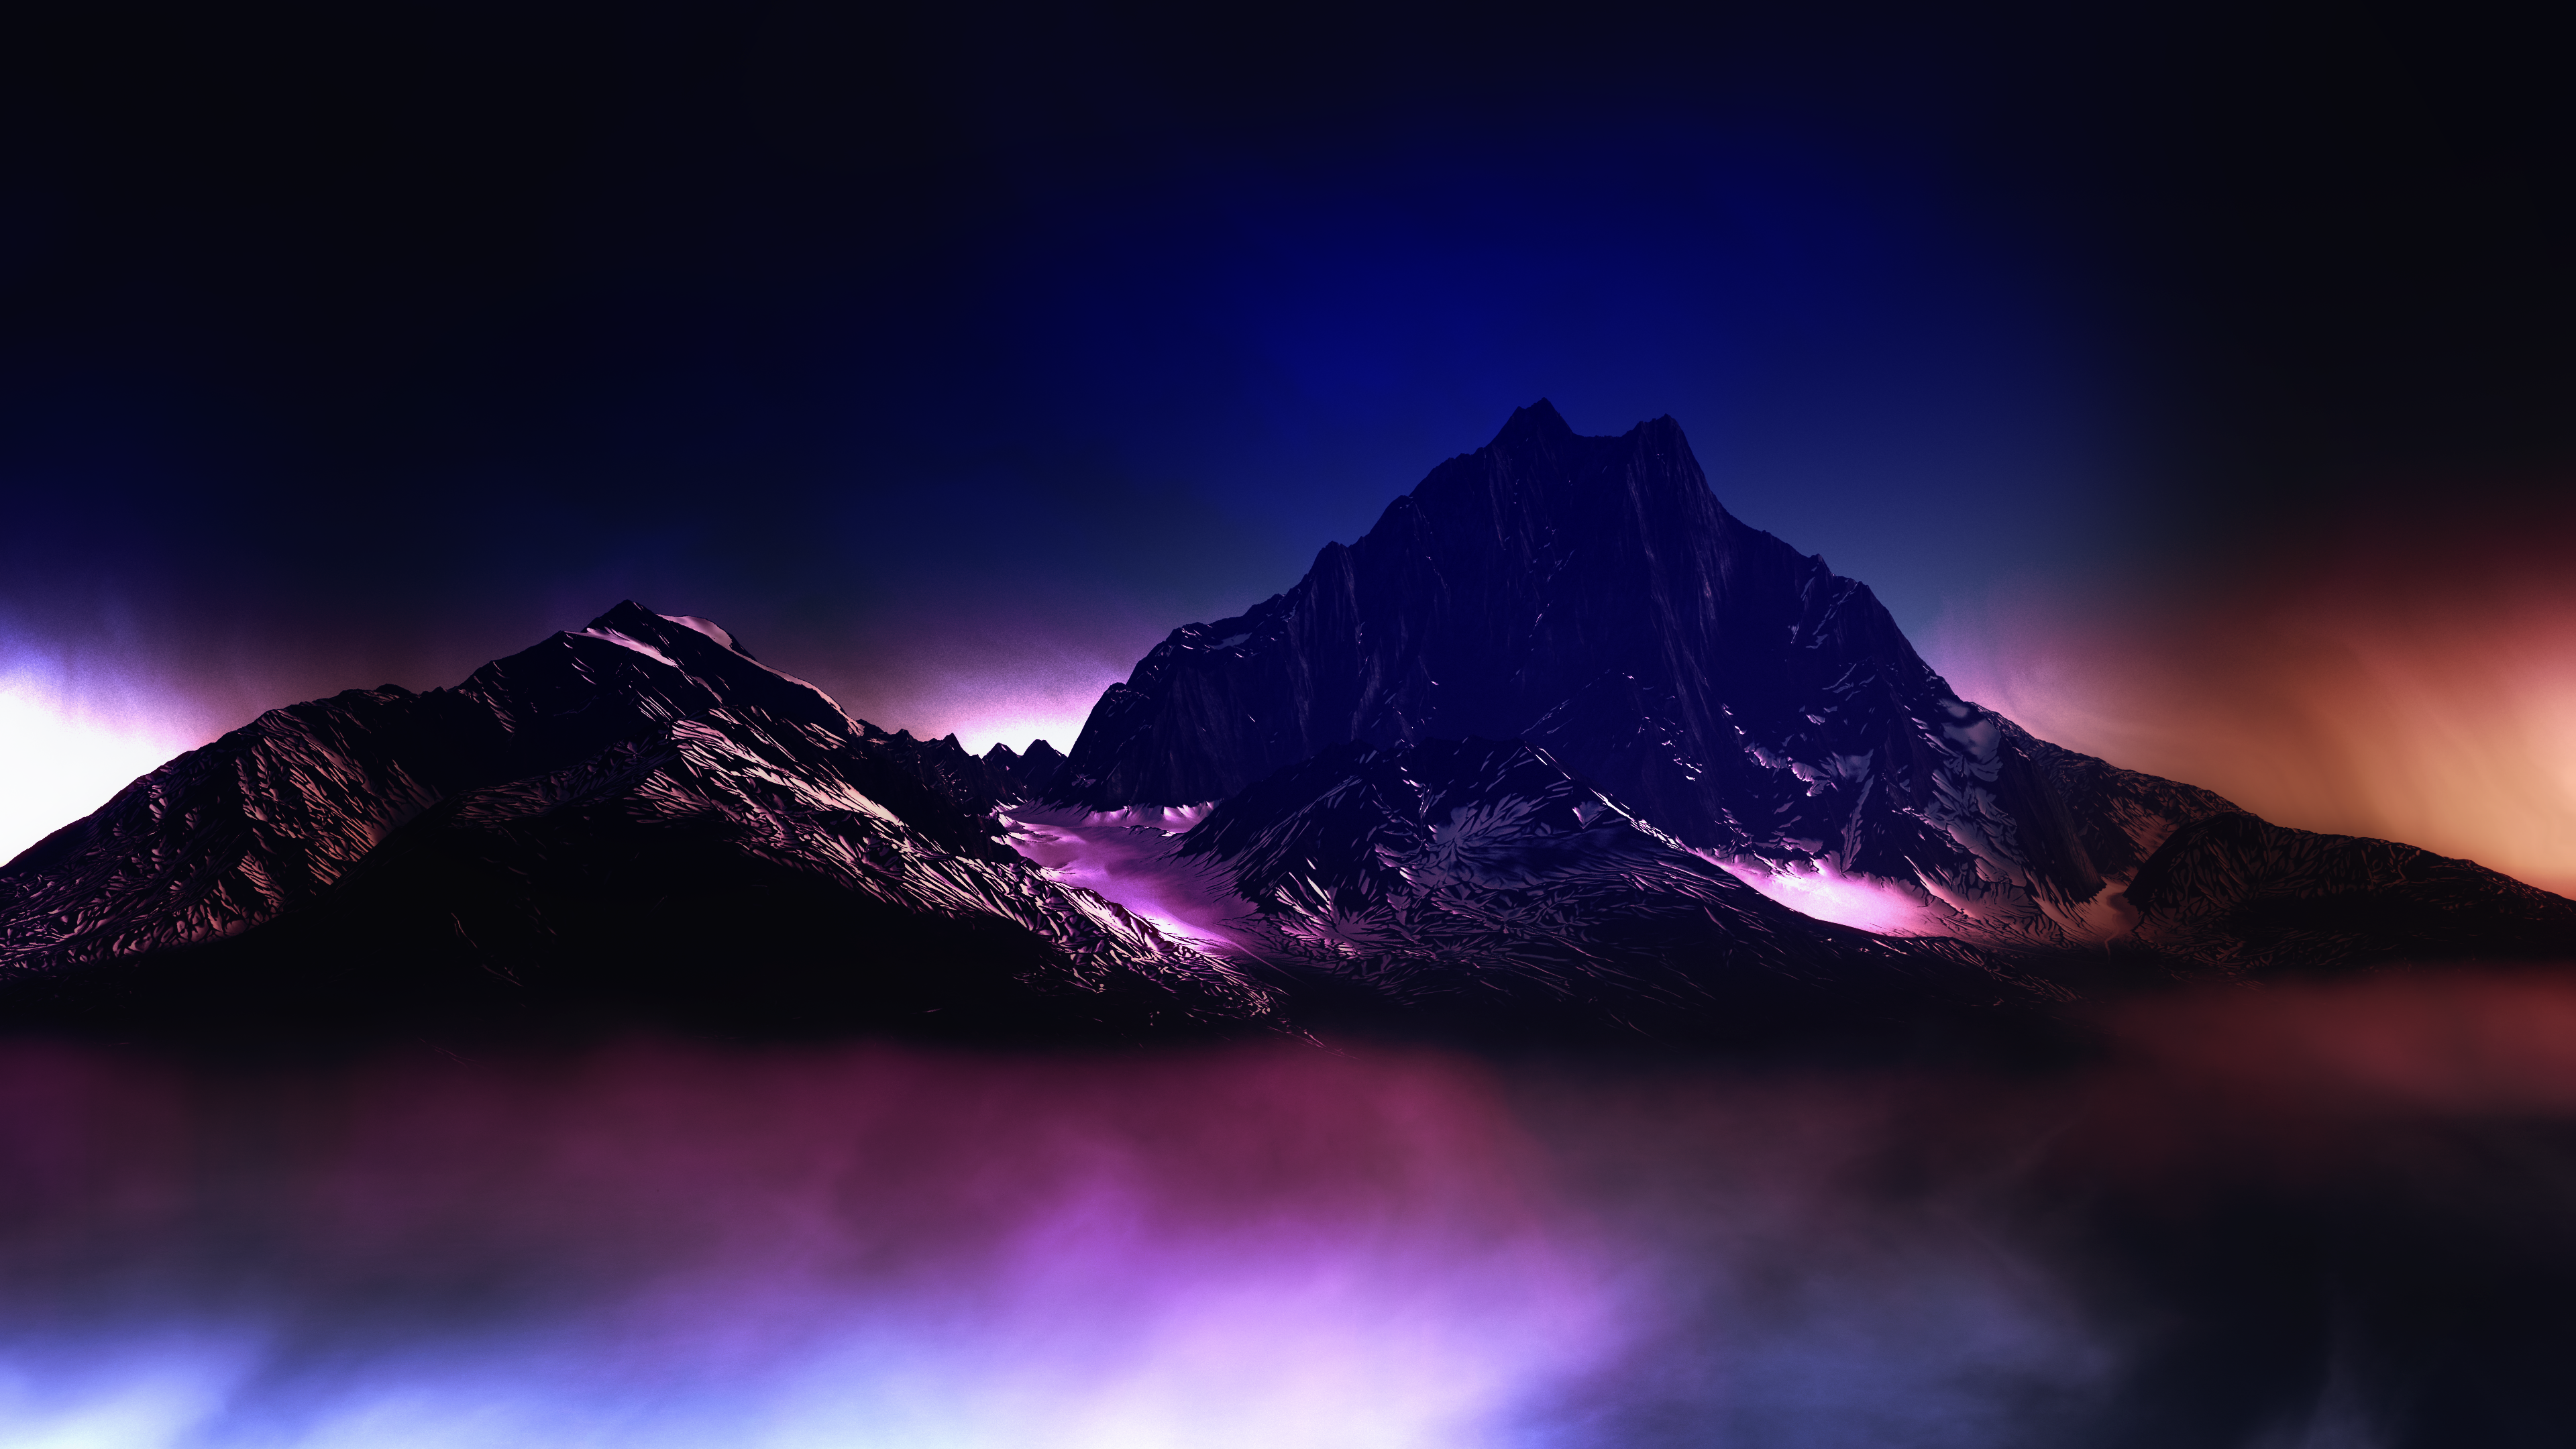 General 3840x2160 hypnoshot digital art artwork illustration CGI mountains nature landscape nightscape night peak mist